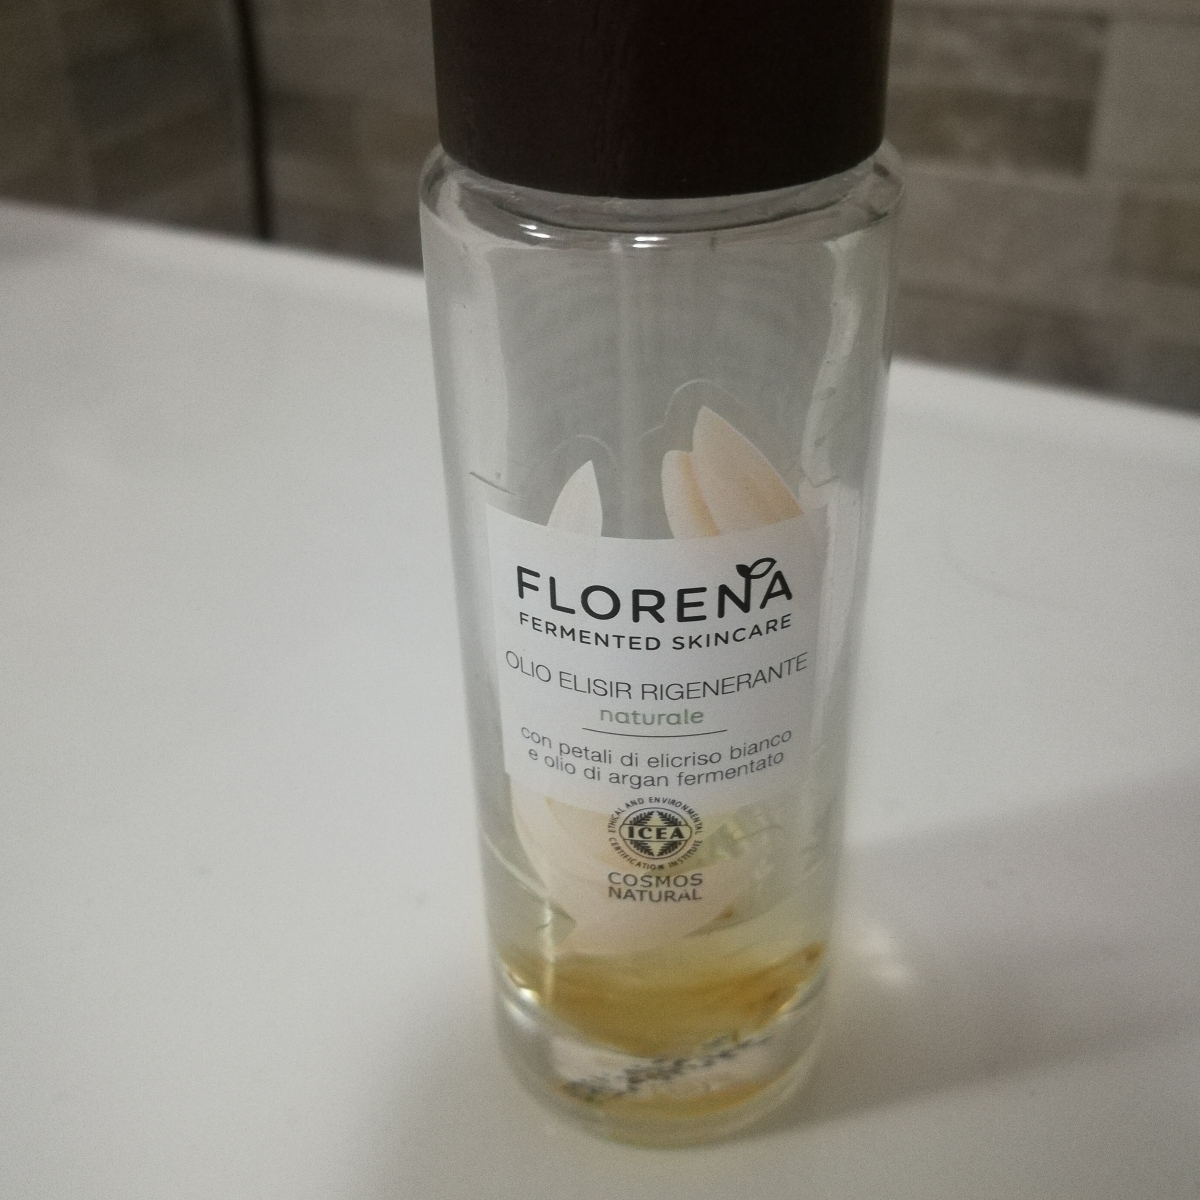 Florena Fermented Skincare Olio Elisir Rigenerante Reviews | abillion